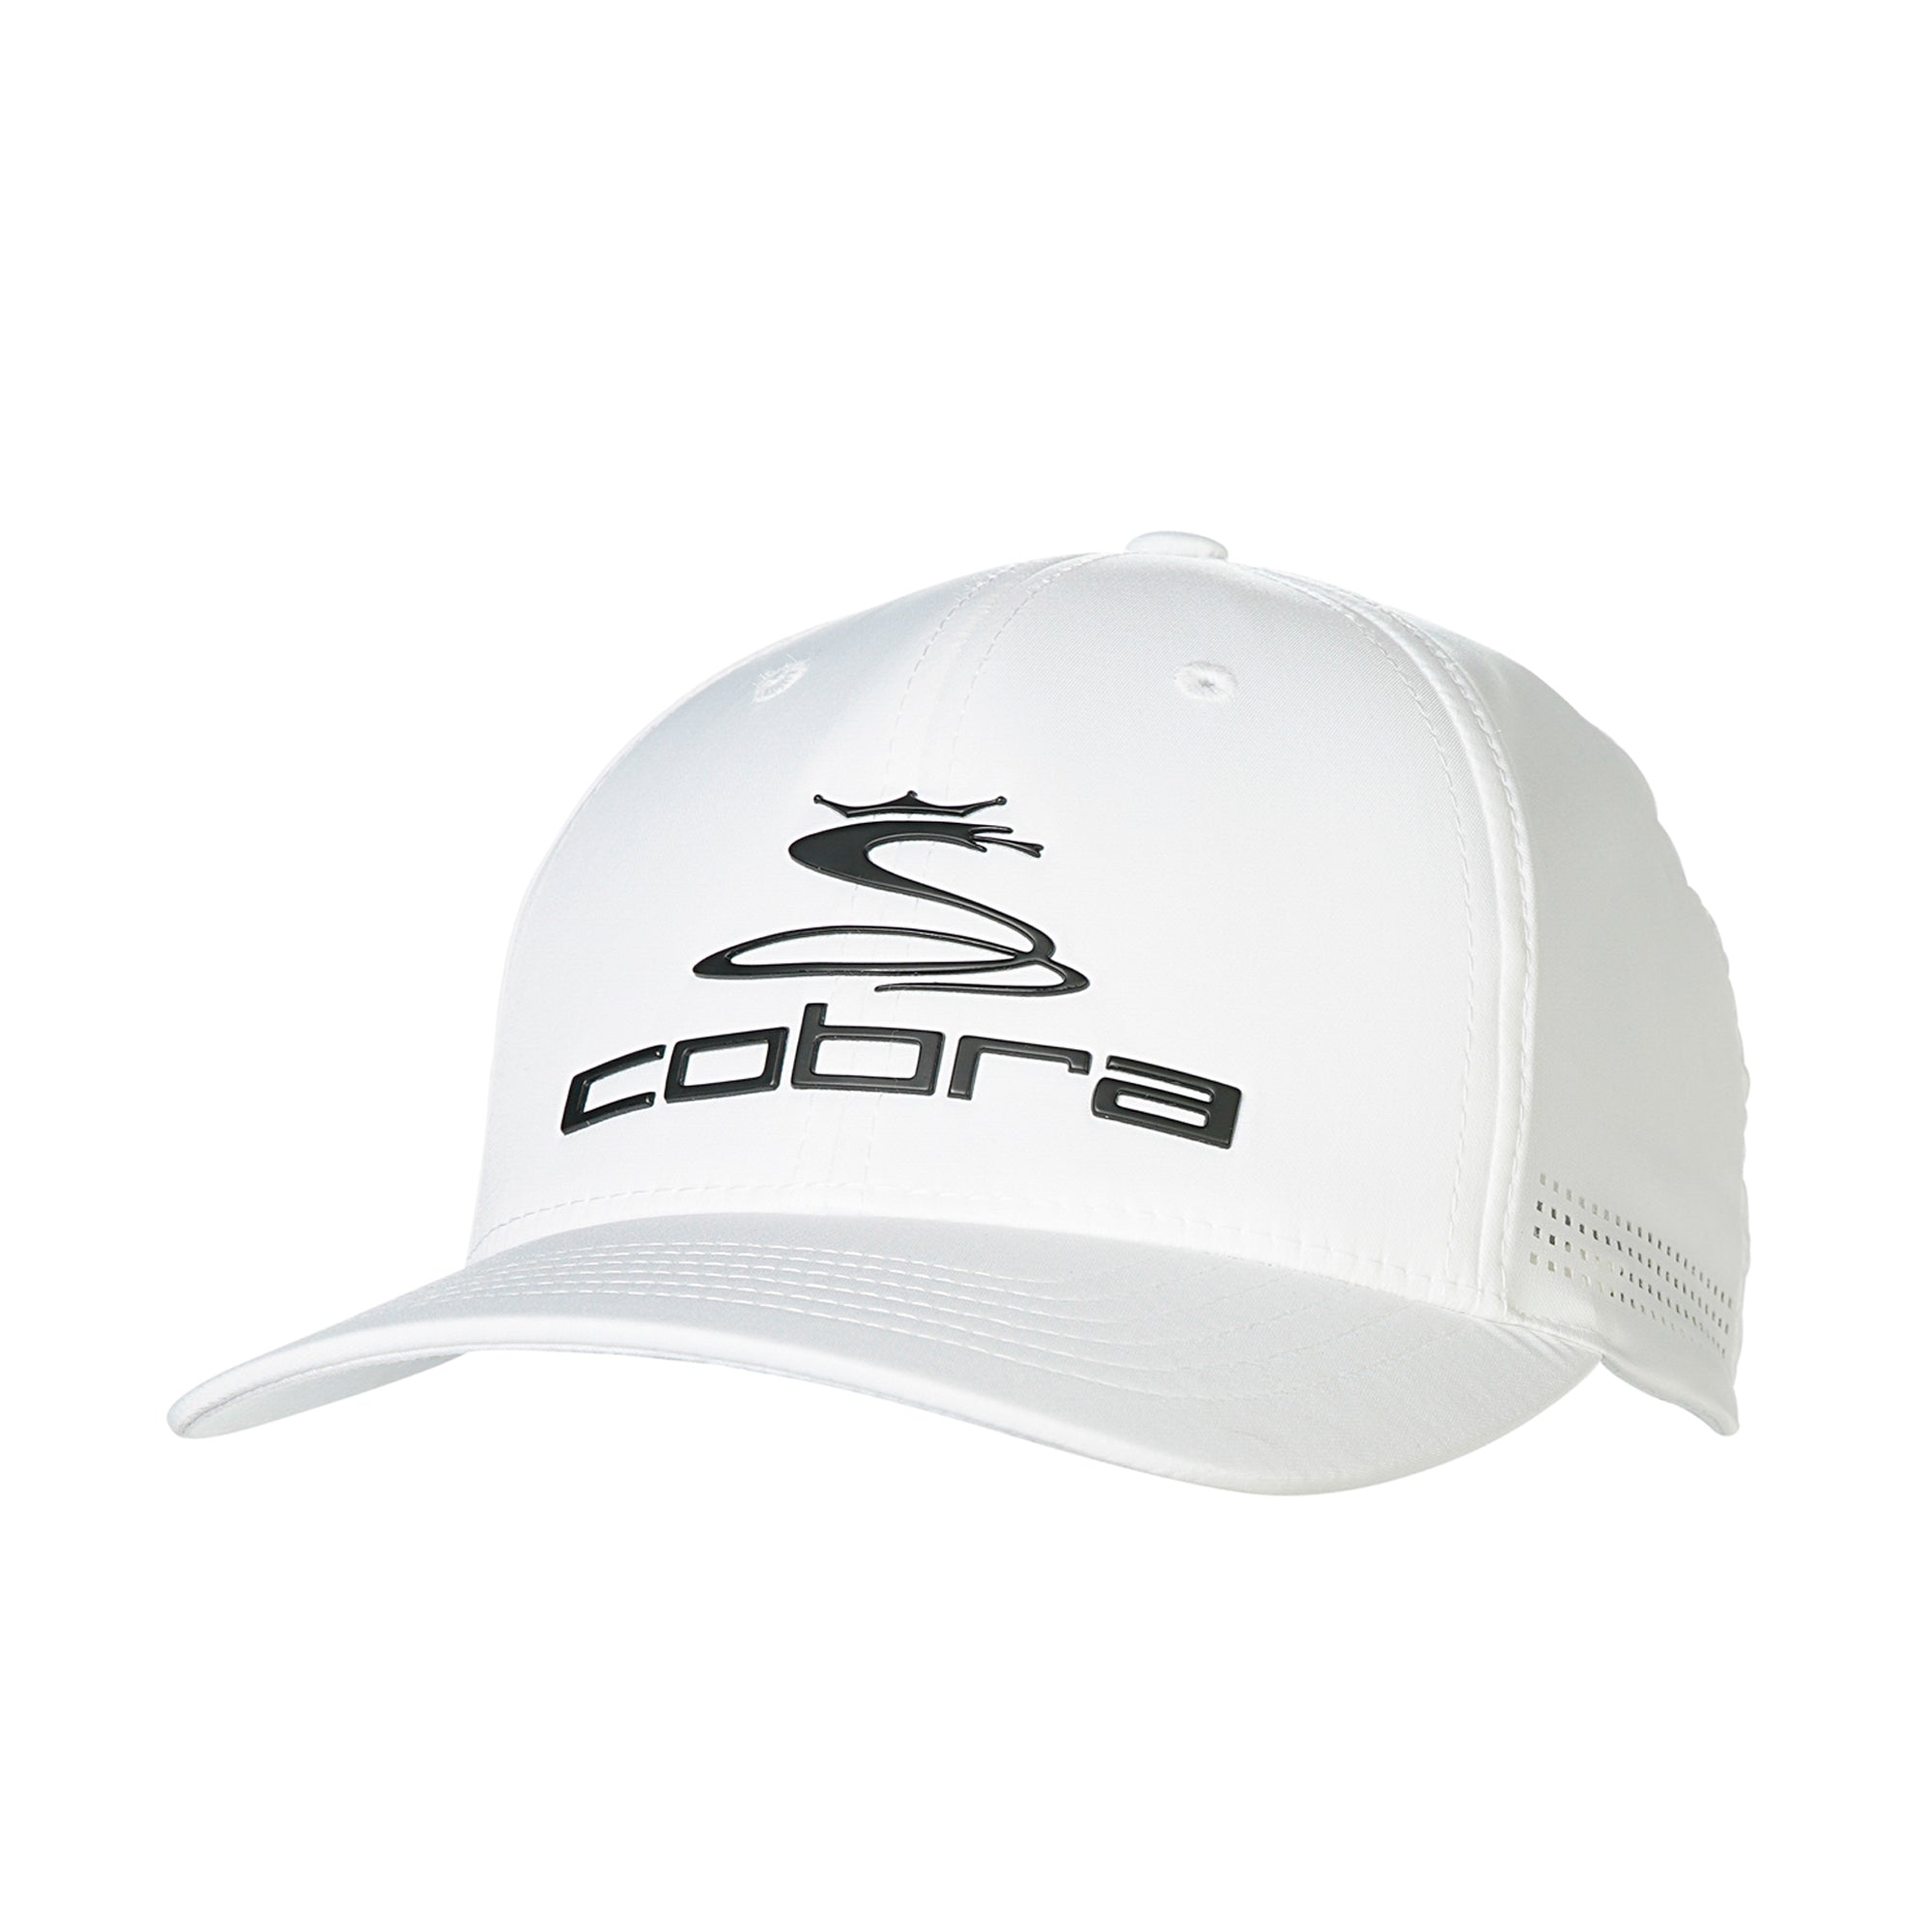 Pro Tour Stretch Fit Cap – Golf